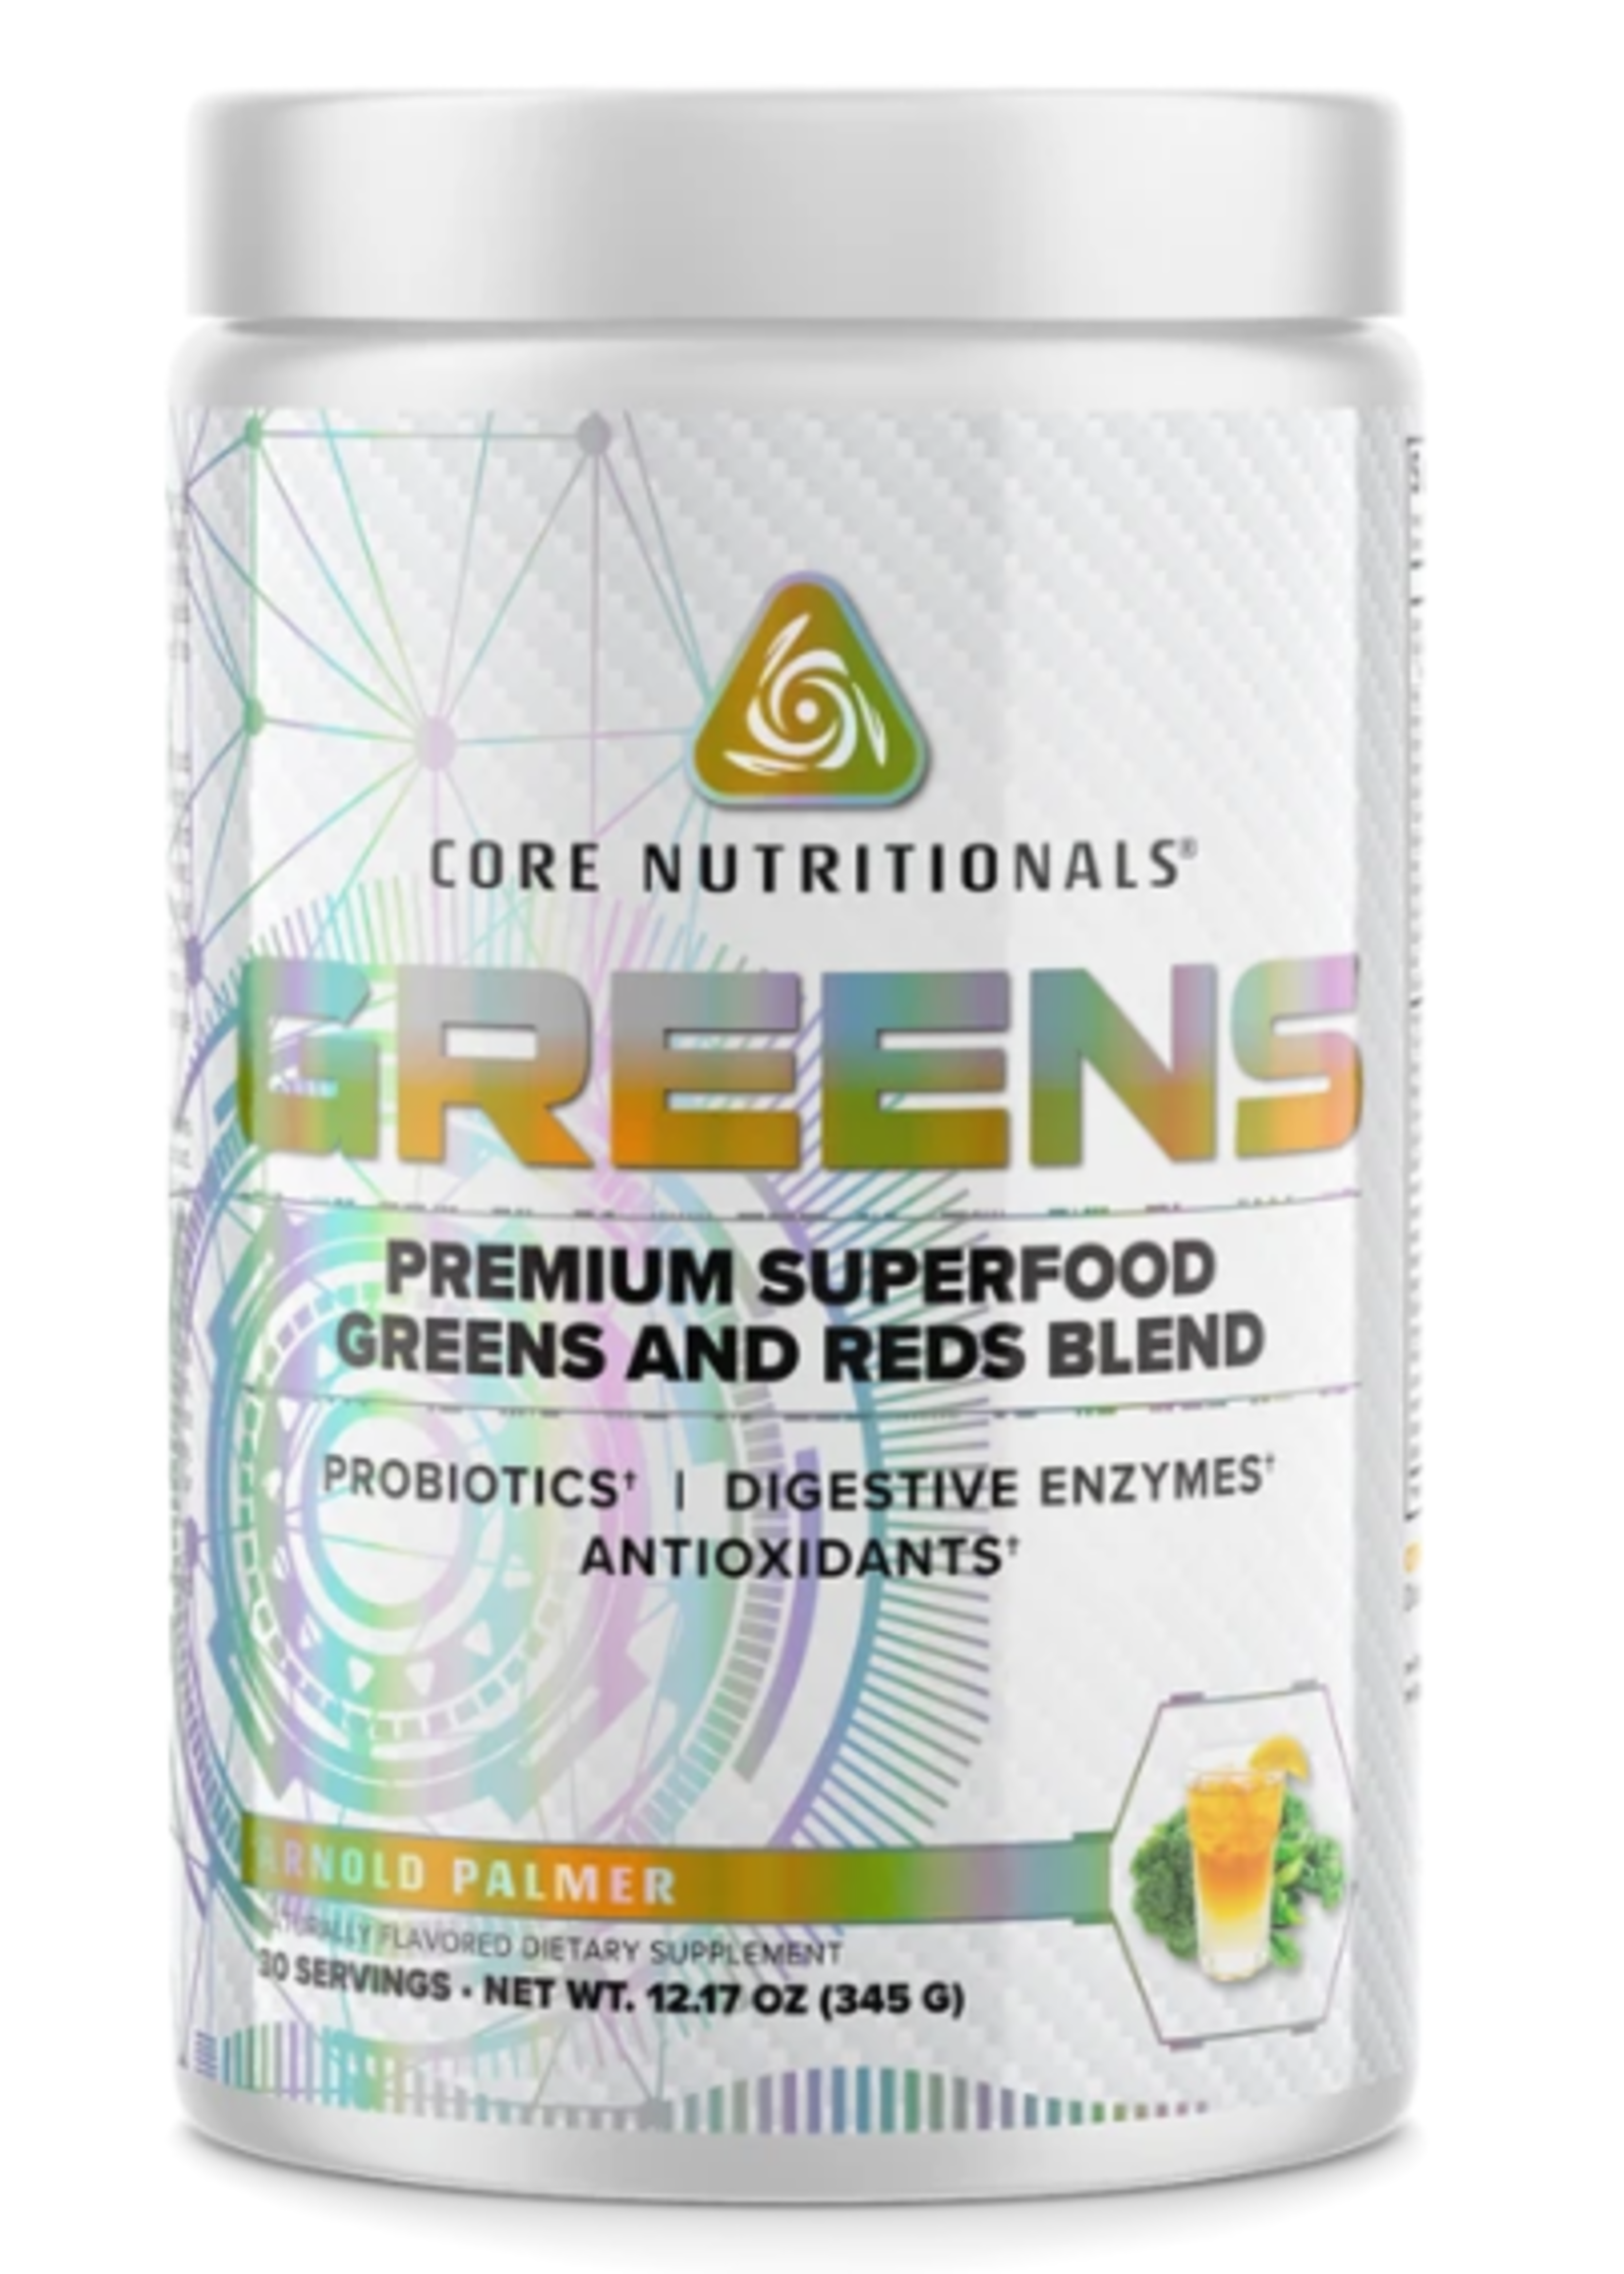 Core Nutritionals Core Greens